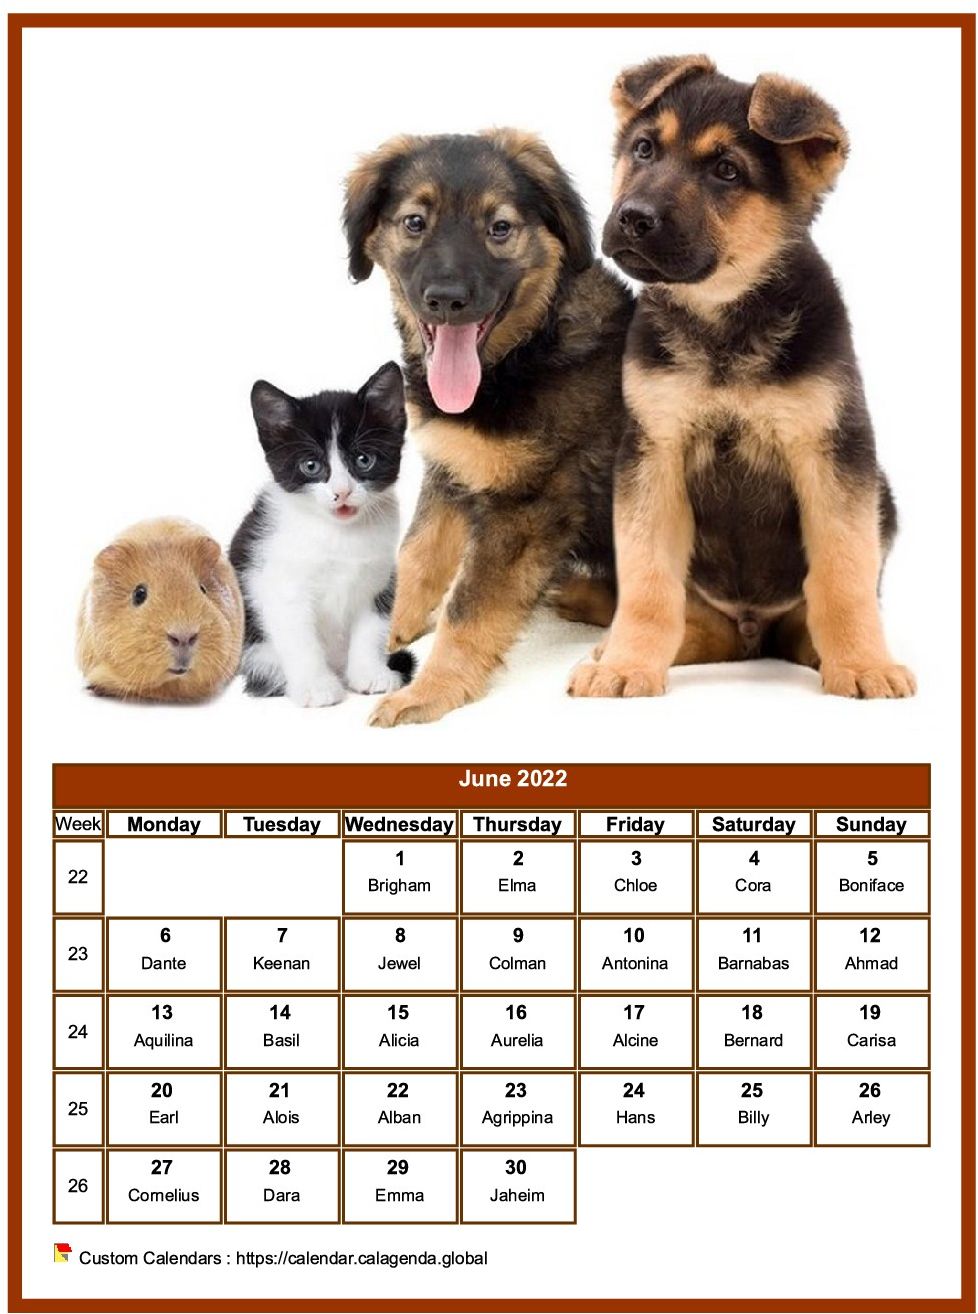 Calendar June 2022 dogs